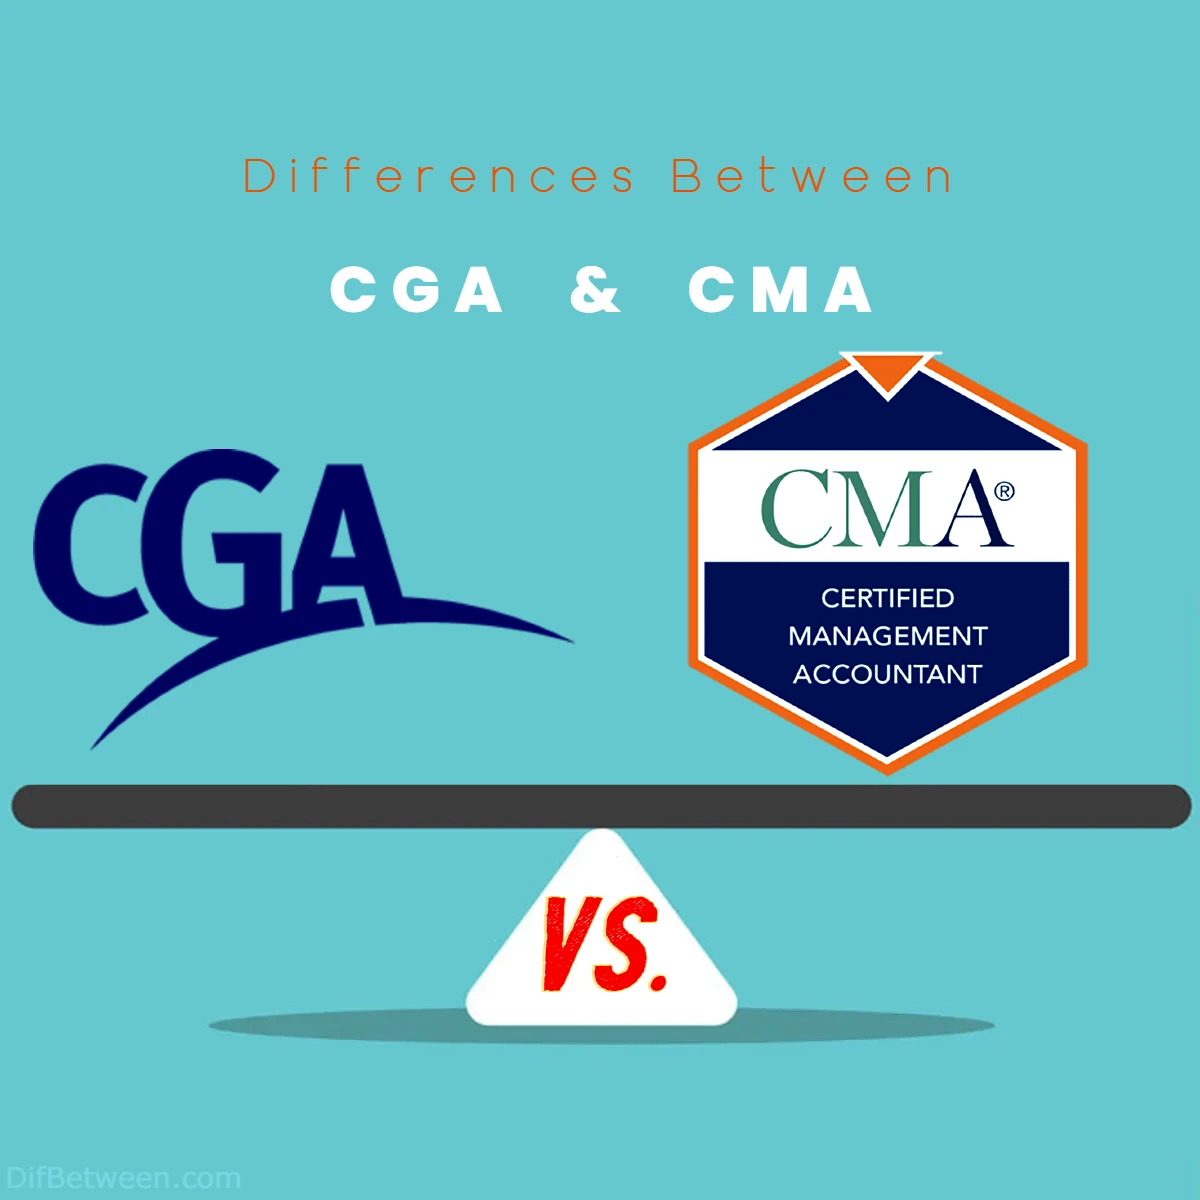 Differences Between CGA vs CMA